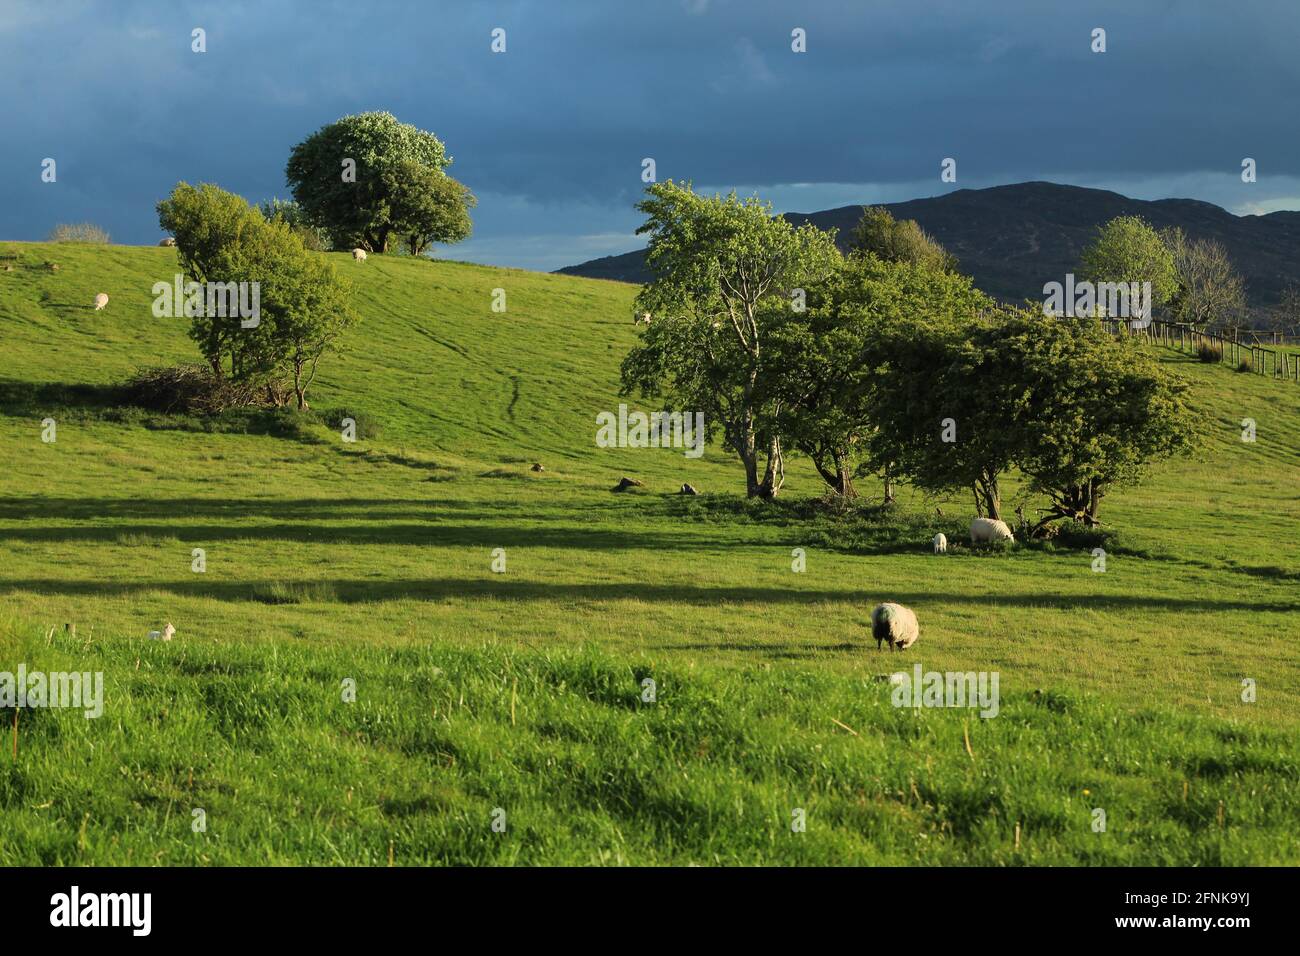 Farmland pastures on hillside in rural Ireland in summer evening sunlight featuring sheep grazing Stock Photo